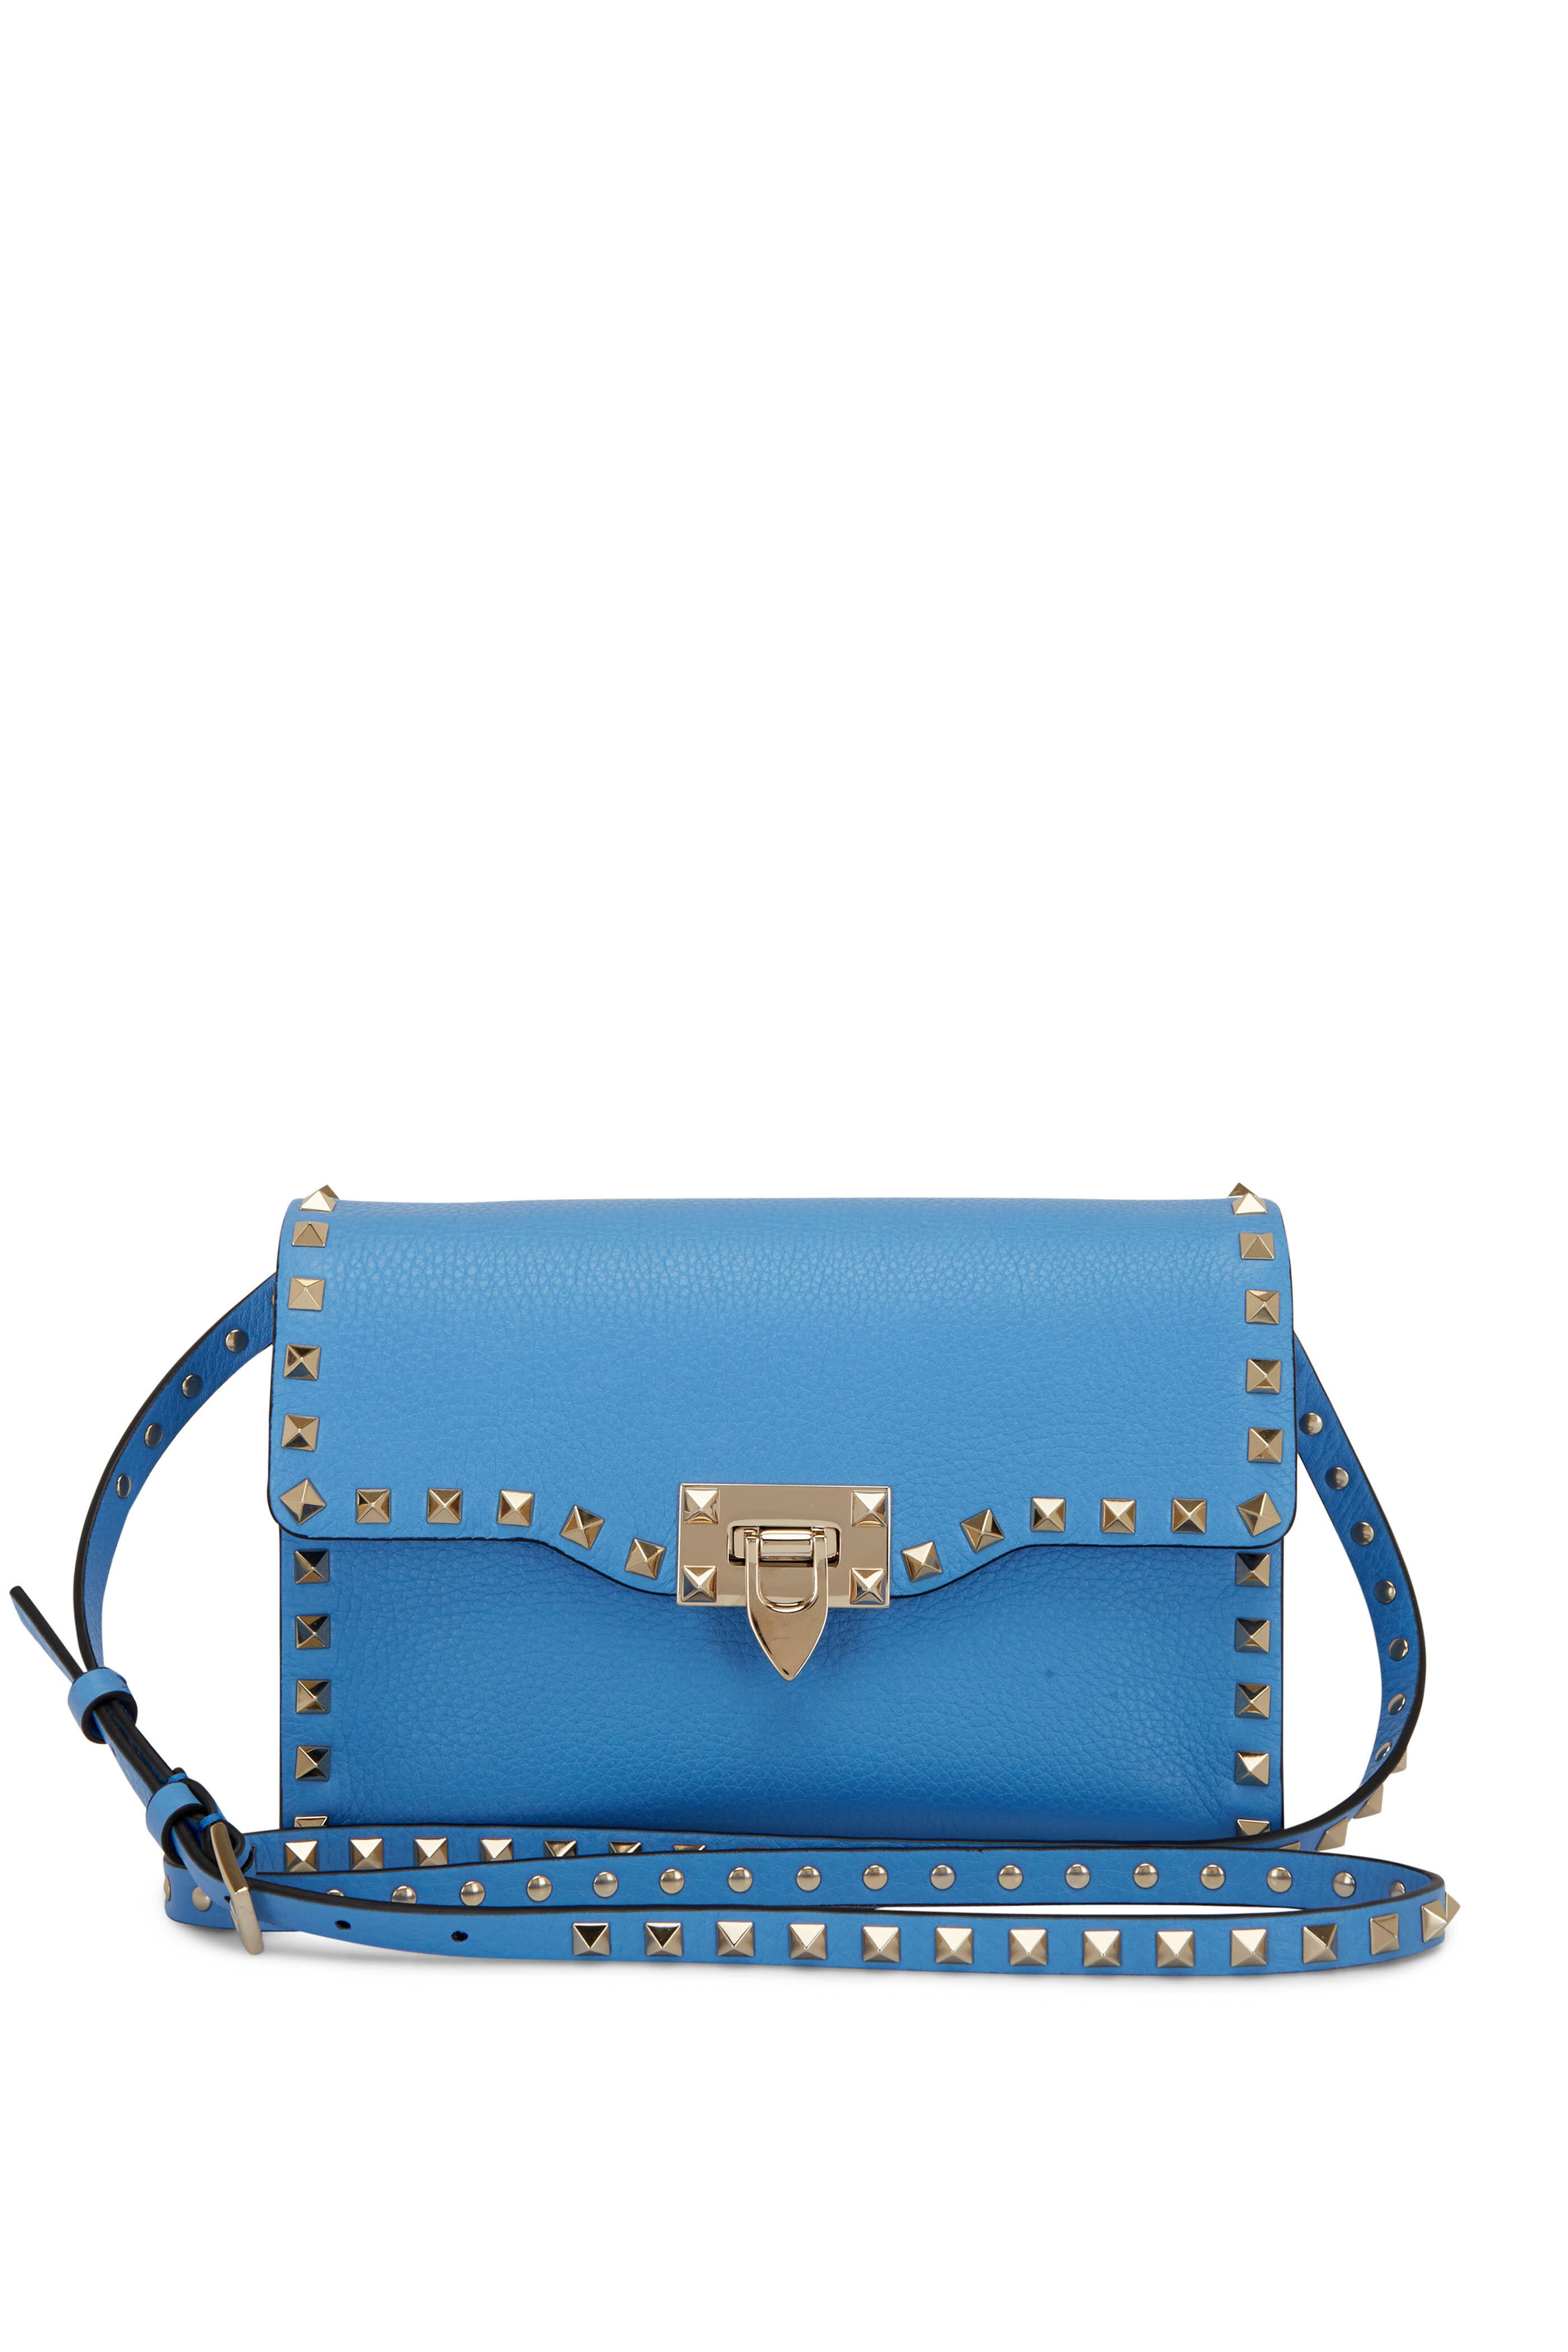 Valentino Garavani: Blue Small Rockstud Bag